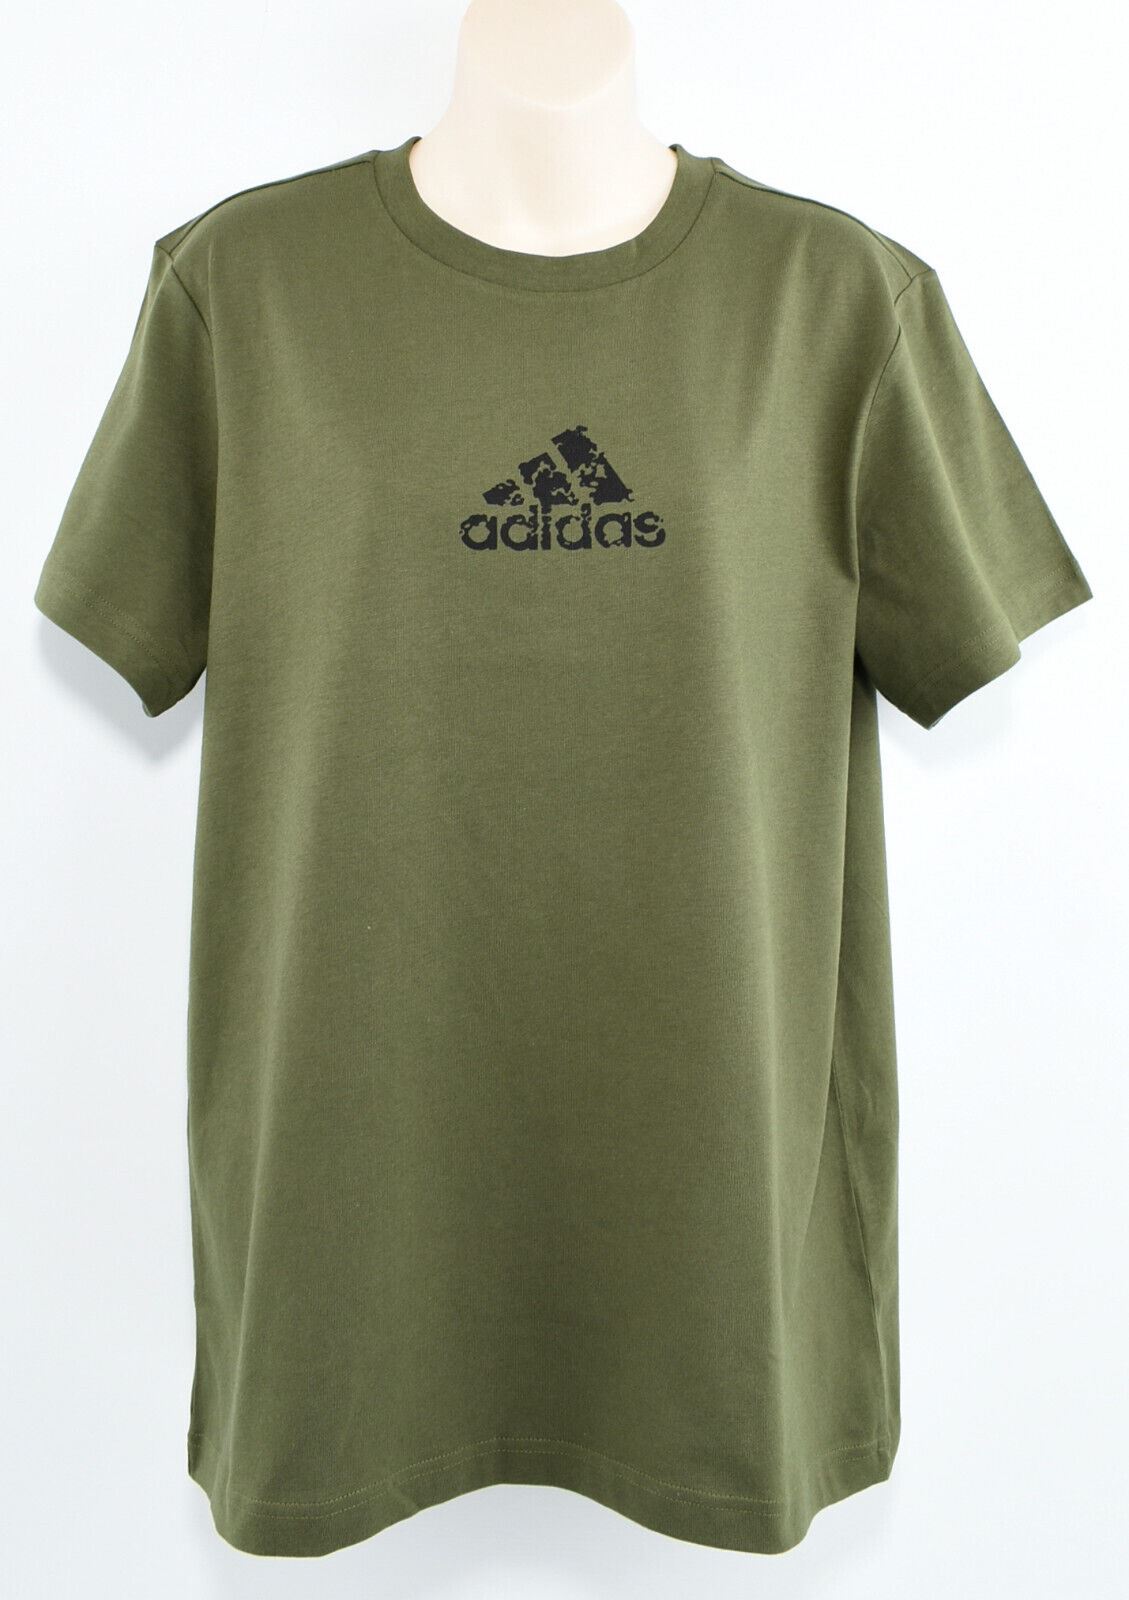 ADIDAS Women's Badge of Sport Logo T-shirt, Wild Pine (Green), size S /UK 8-10